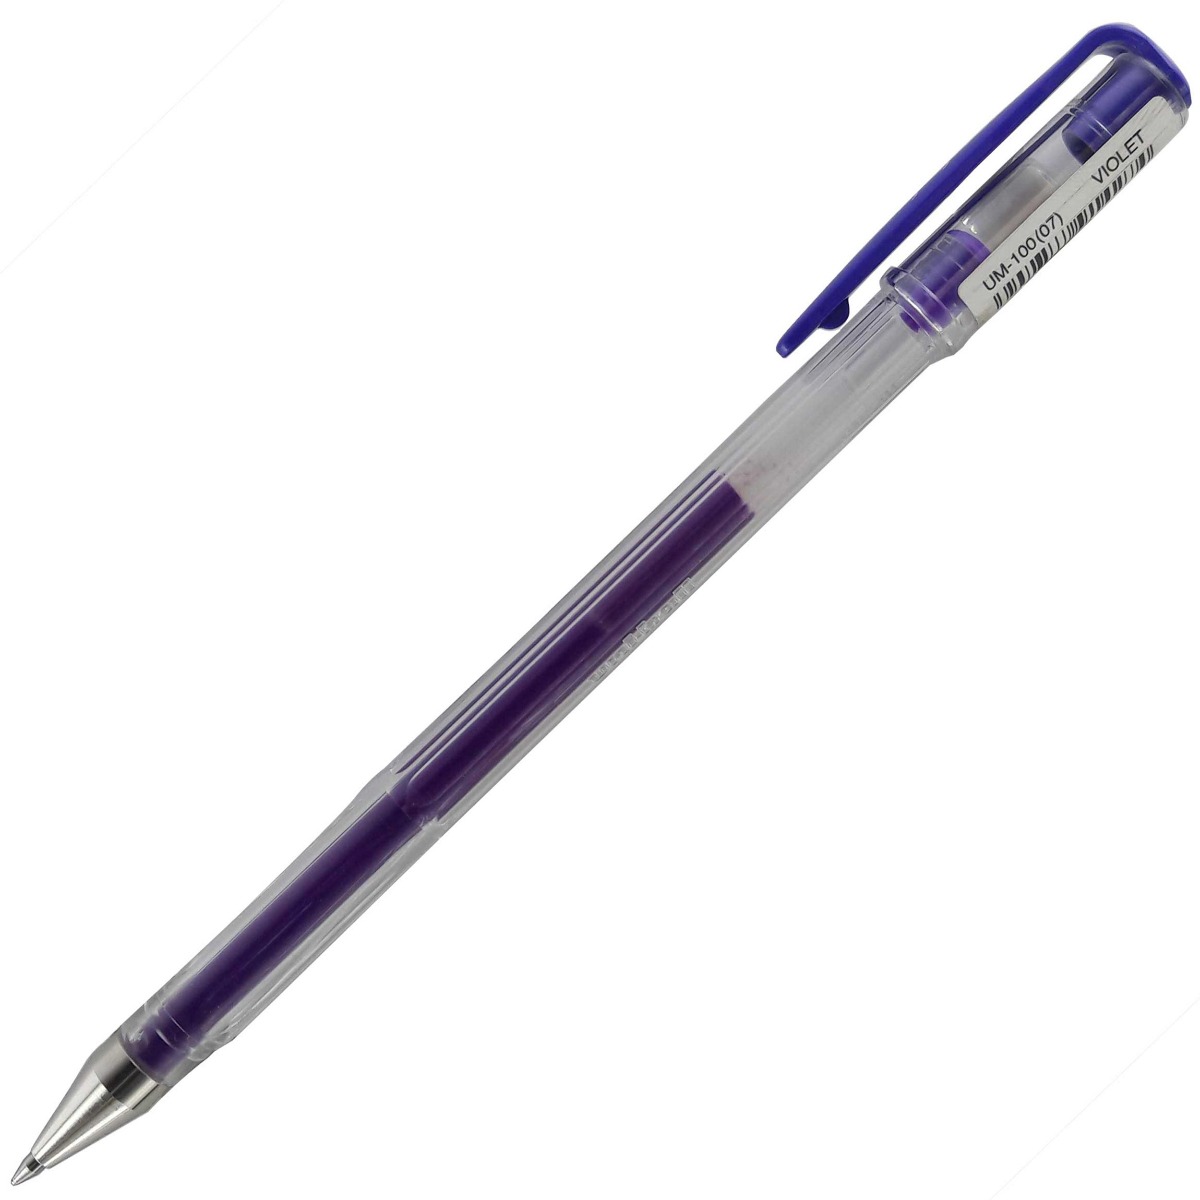 Uniball signo Model: 12986 Transparent body with violet color ink fine tip cap type gel pen